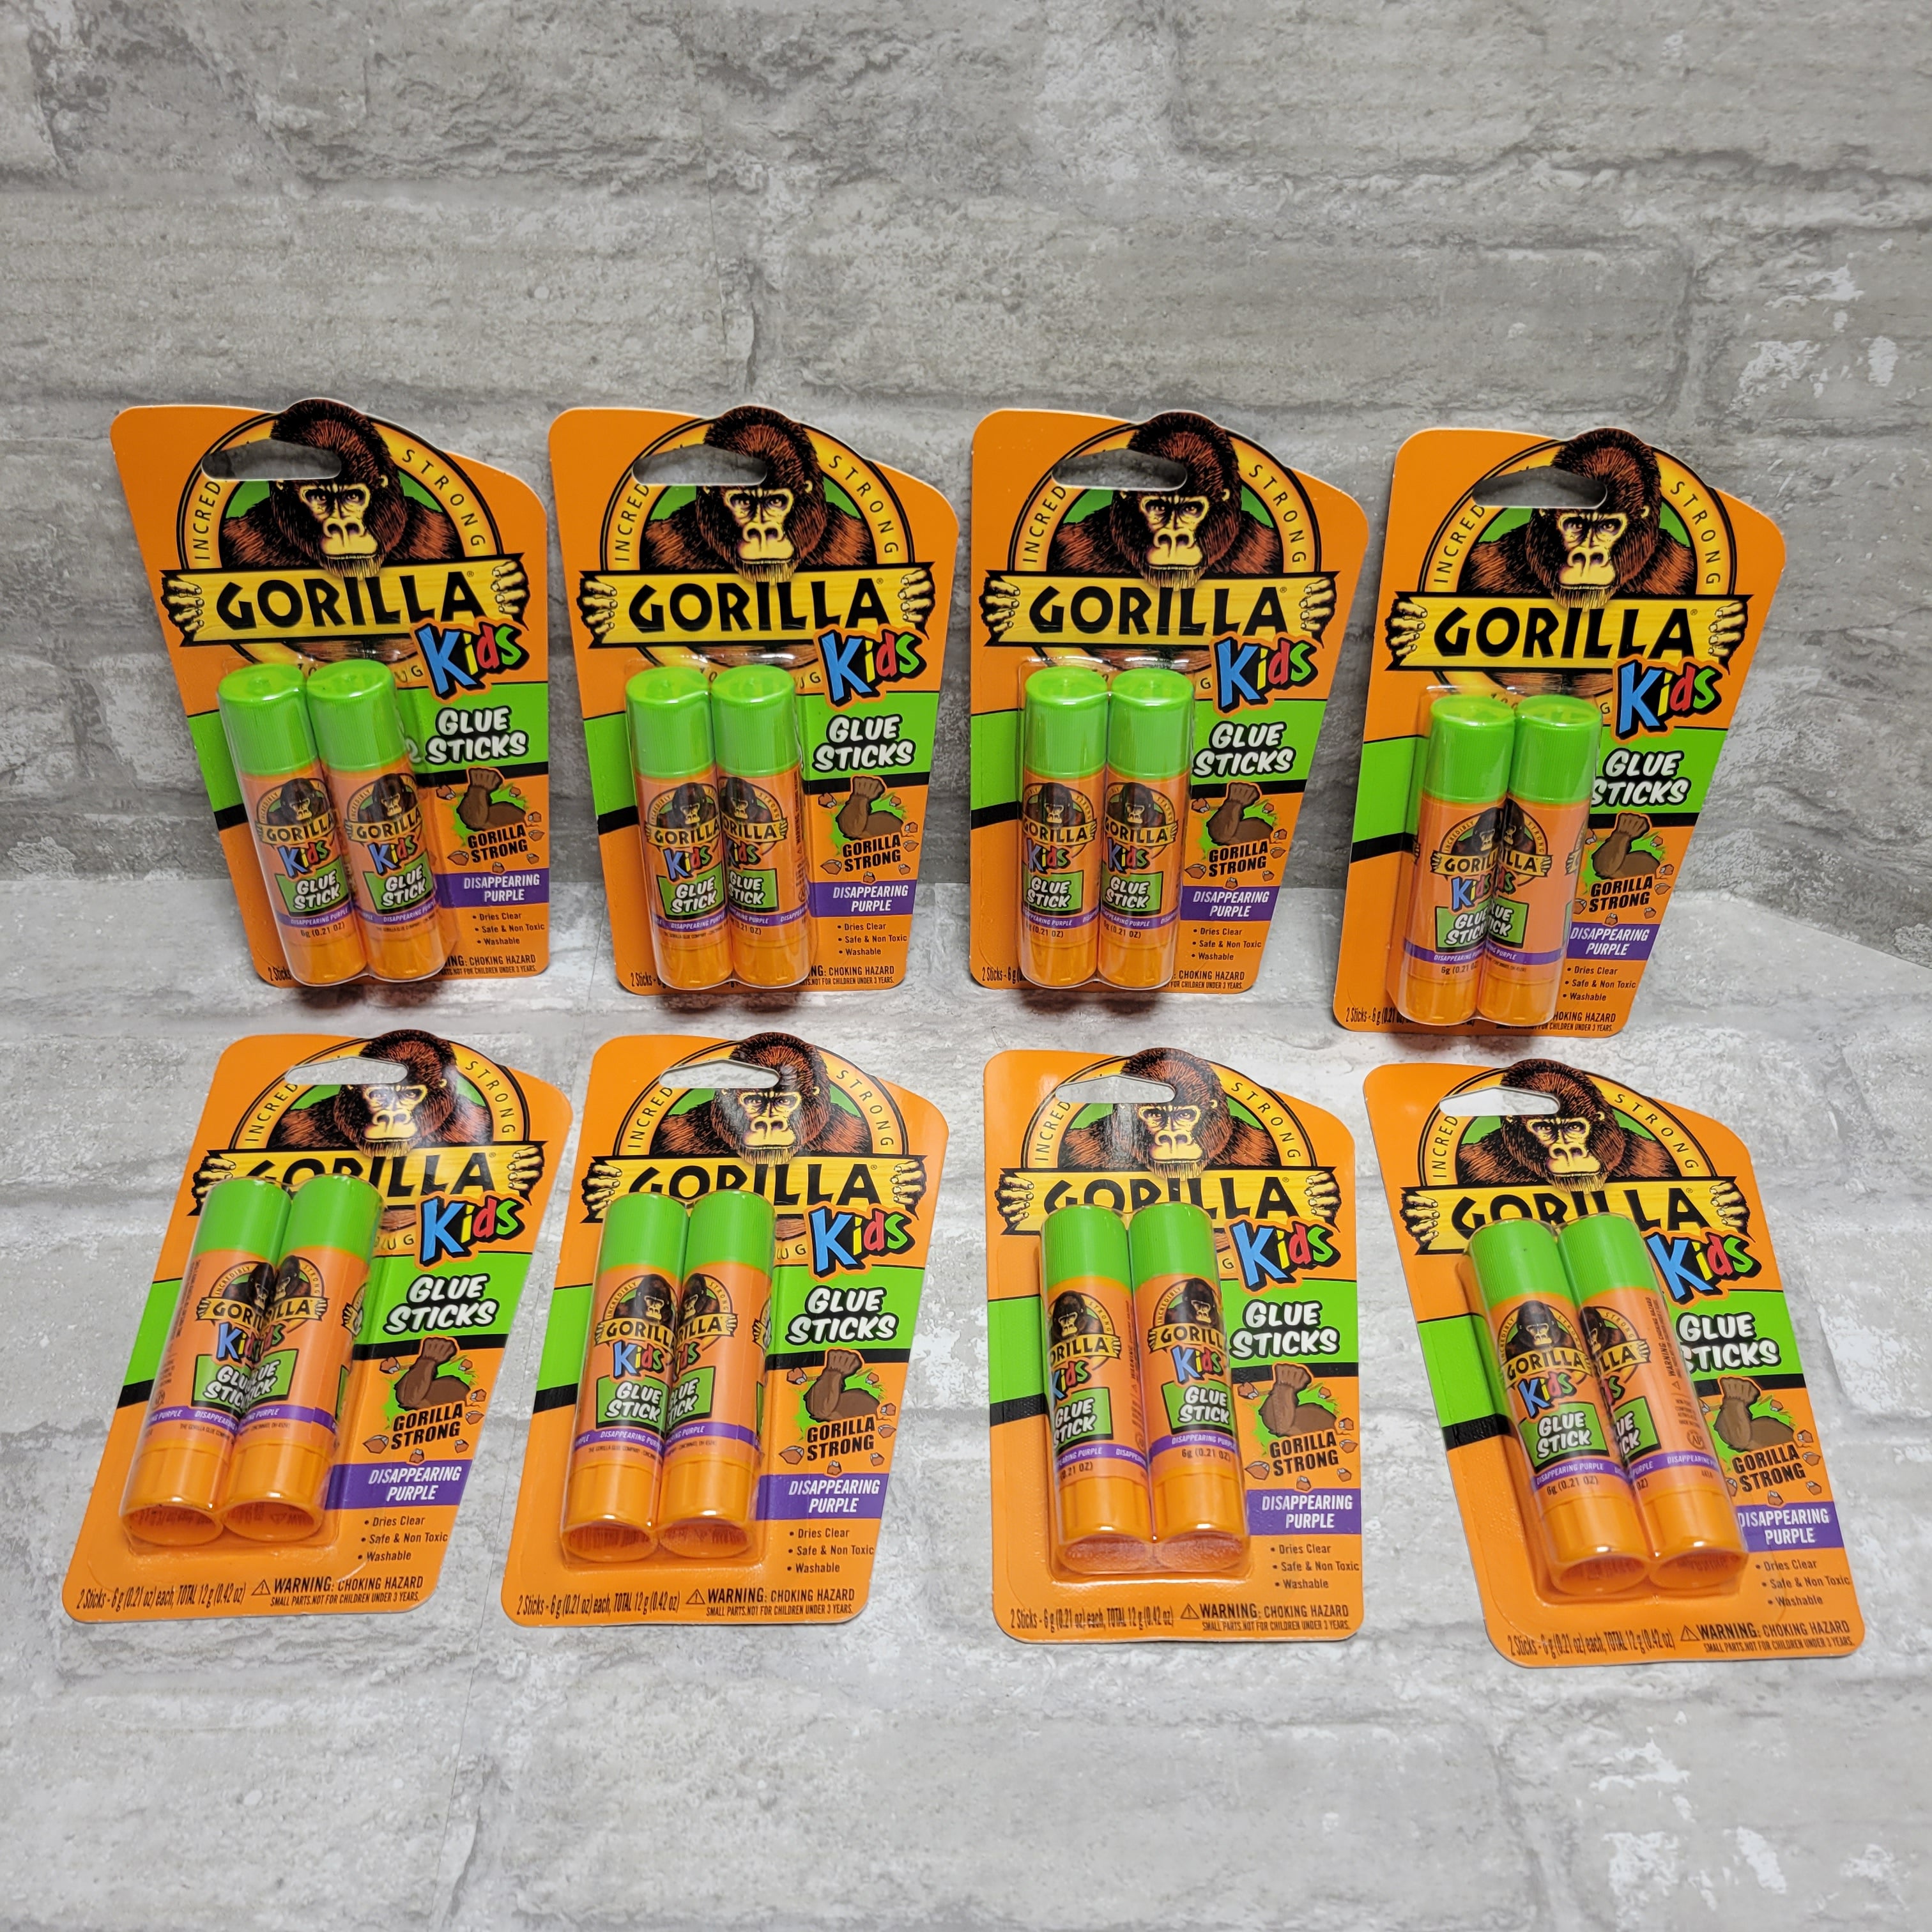 Gorilla Glue Sticks, Kids, 6 Pack - 6 x 6 (0.21 oz) stick total 36 g (1.26 oz)